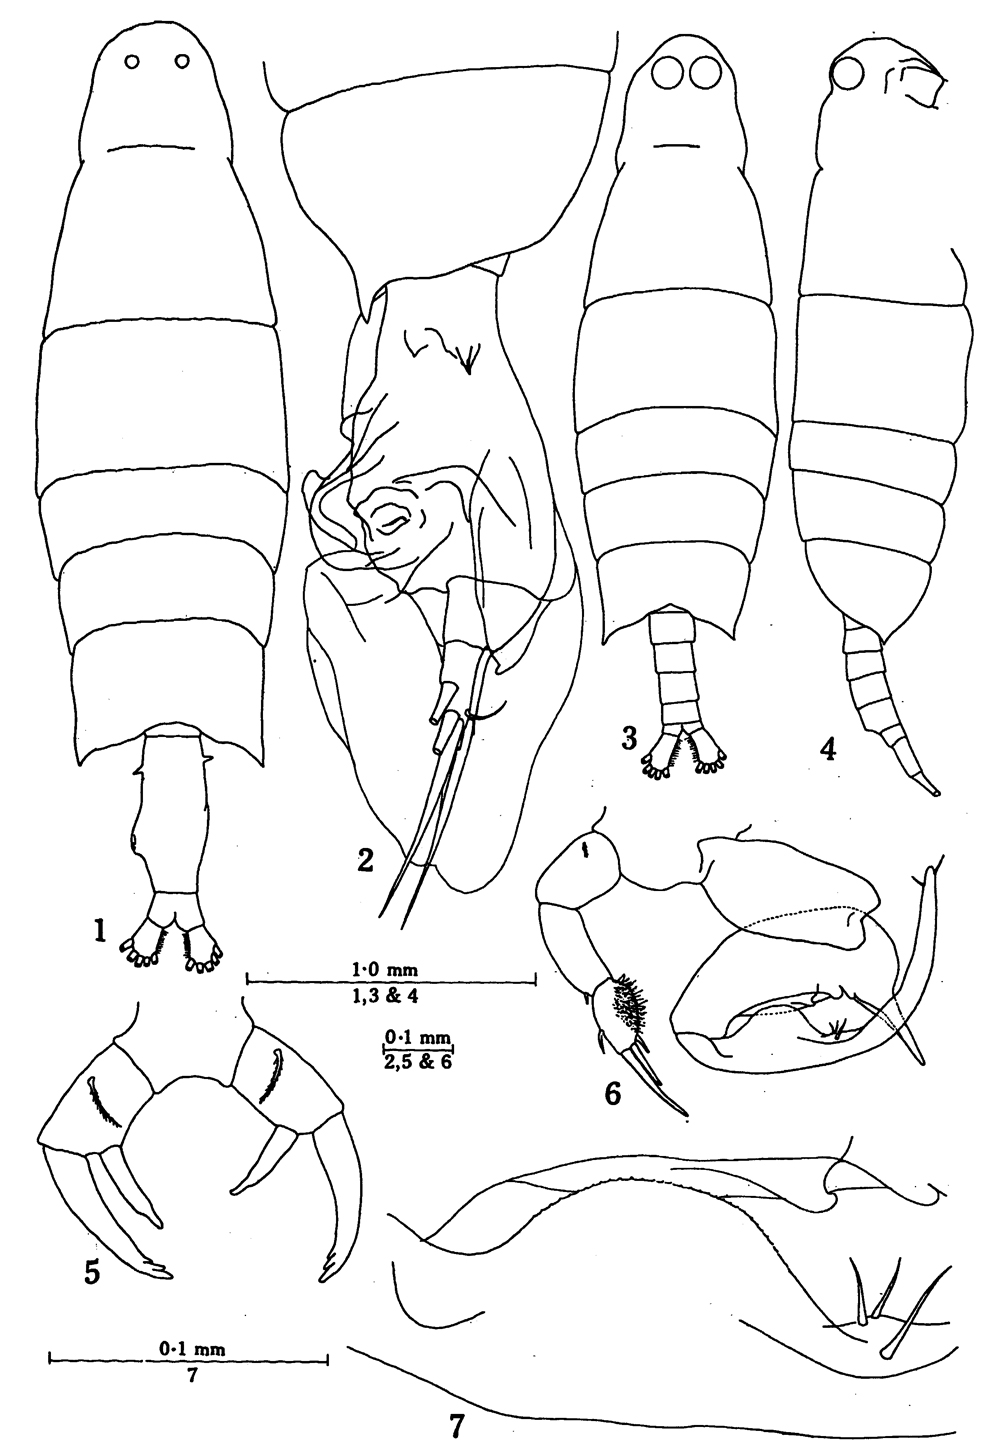 Species Labidocera tasmanica - Plate 1 of morphological figures